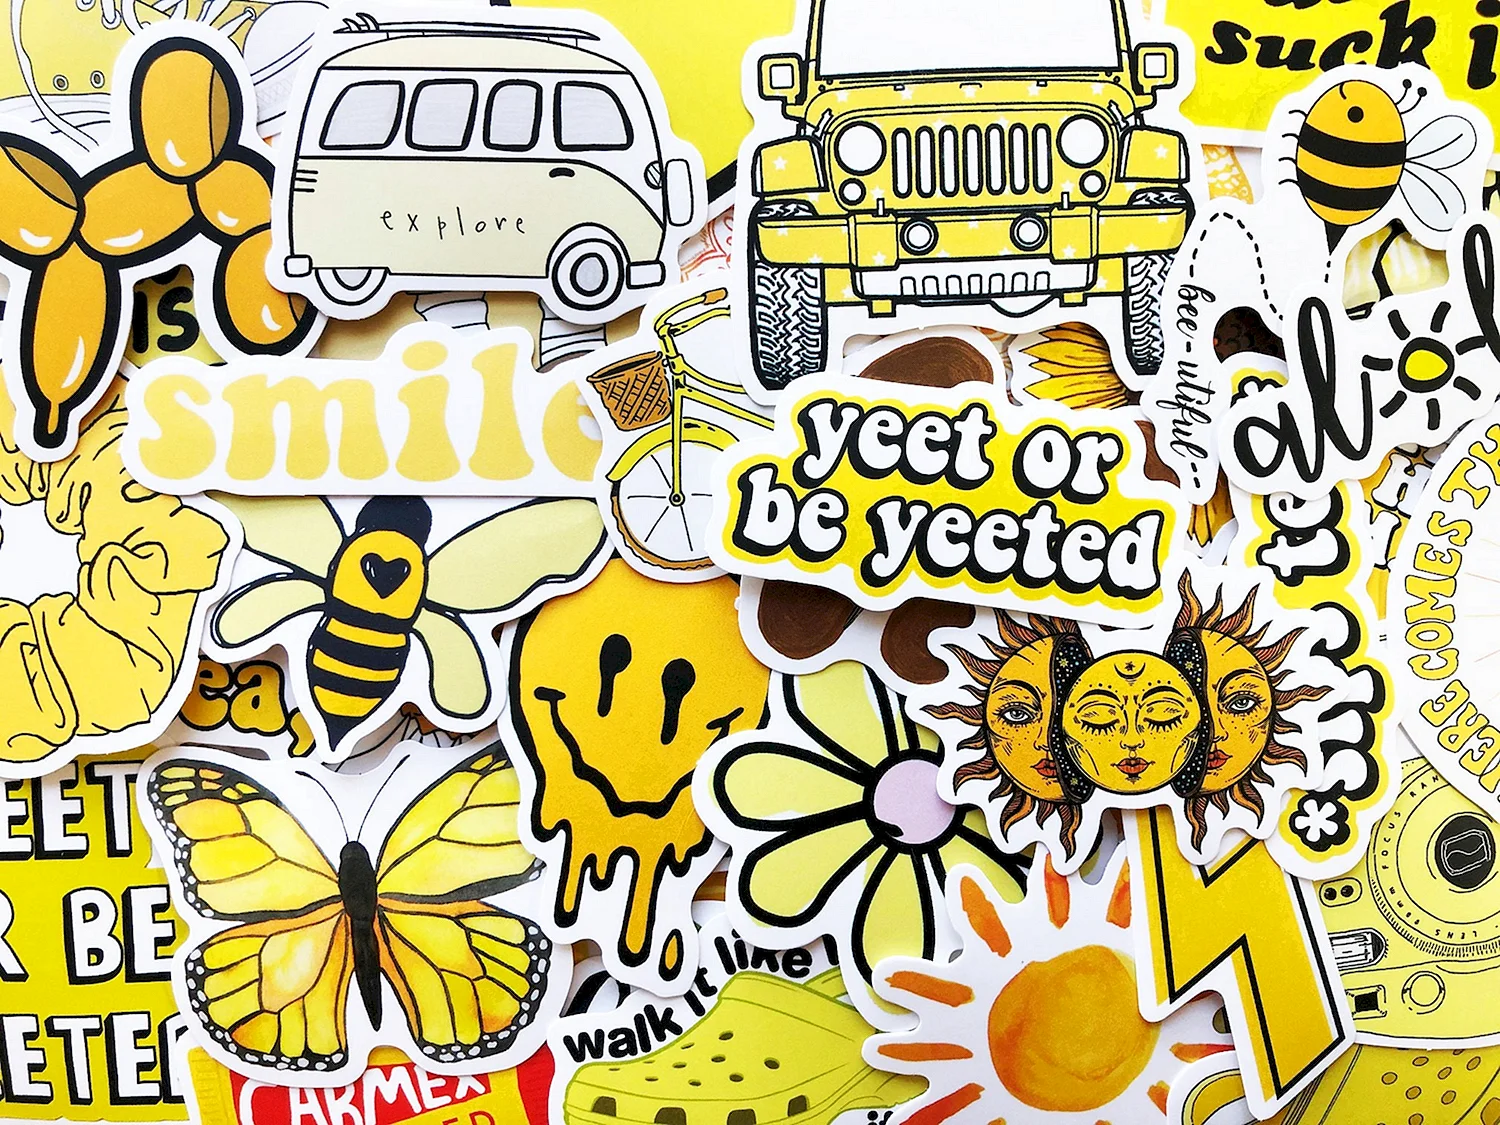 Yellow Stickers